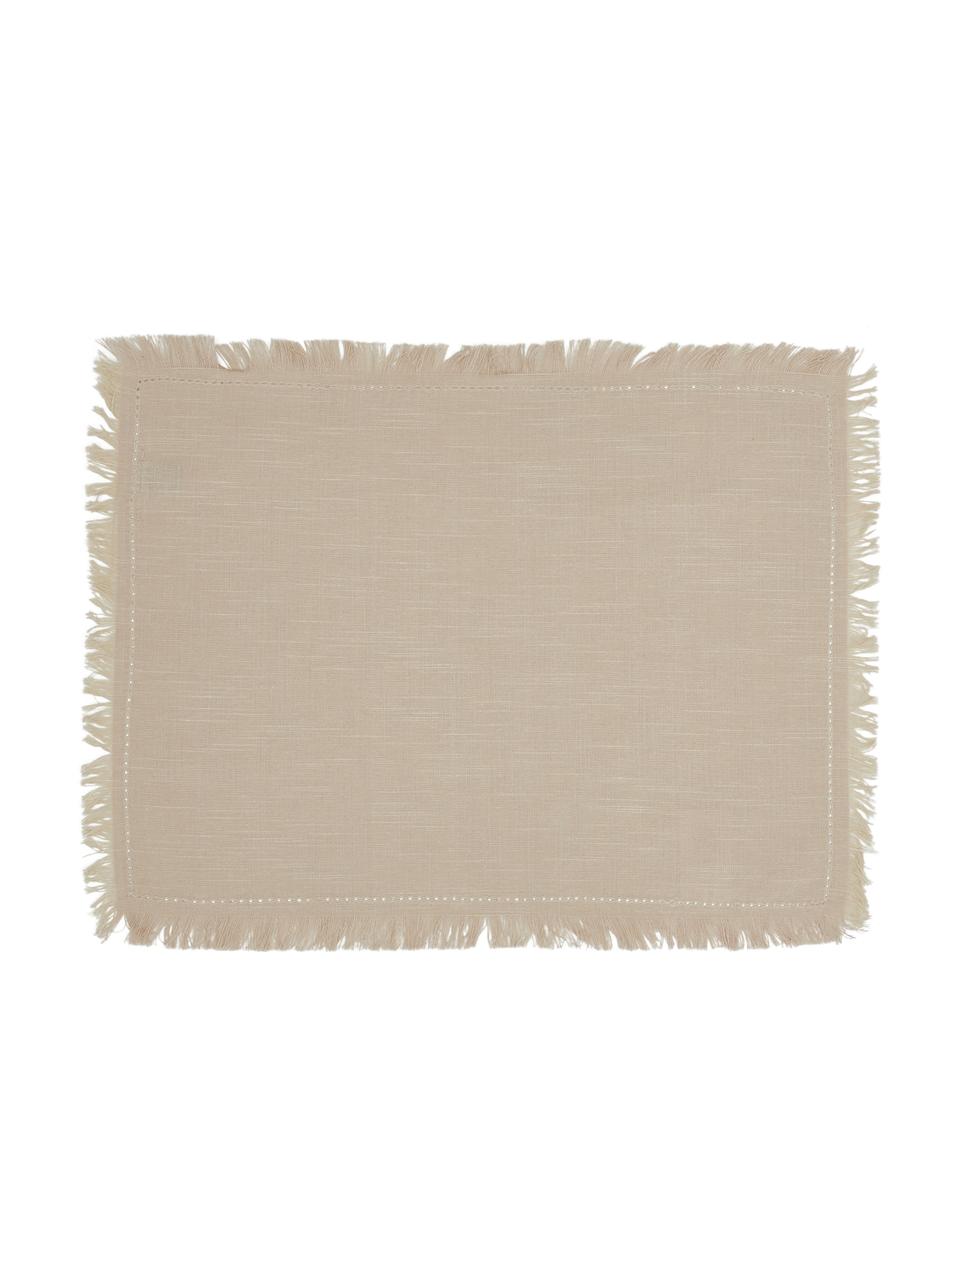 Manteles individuales de algodón con flecos Henley, 2 uds., 100% algodón, Beige, An 35 x L 45 cm